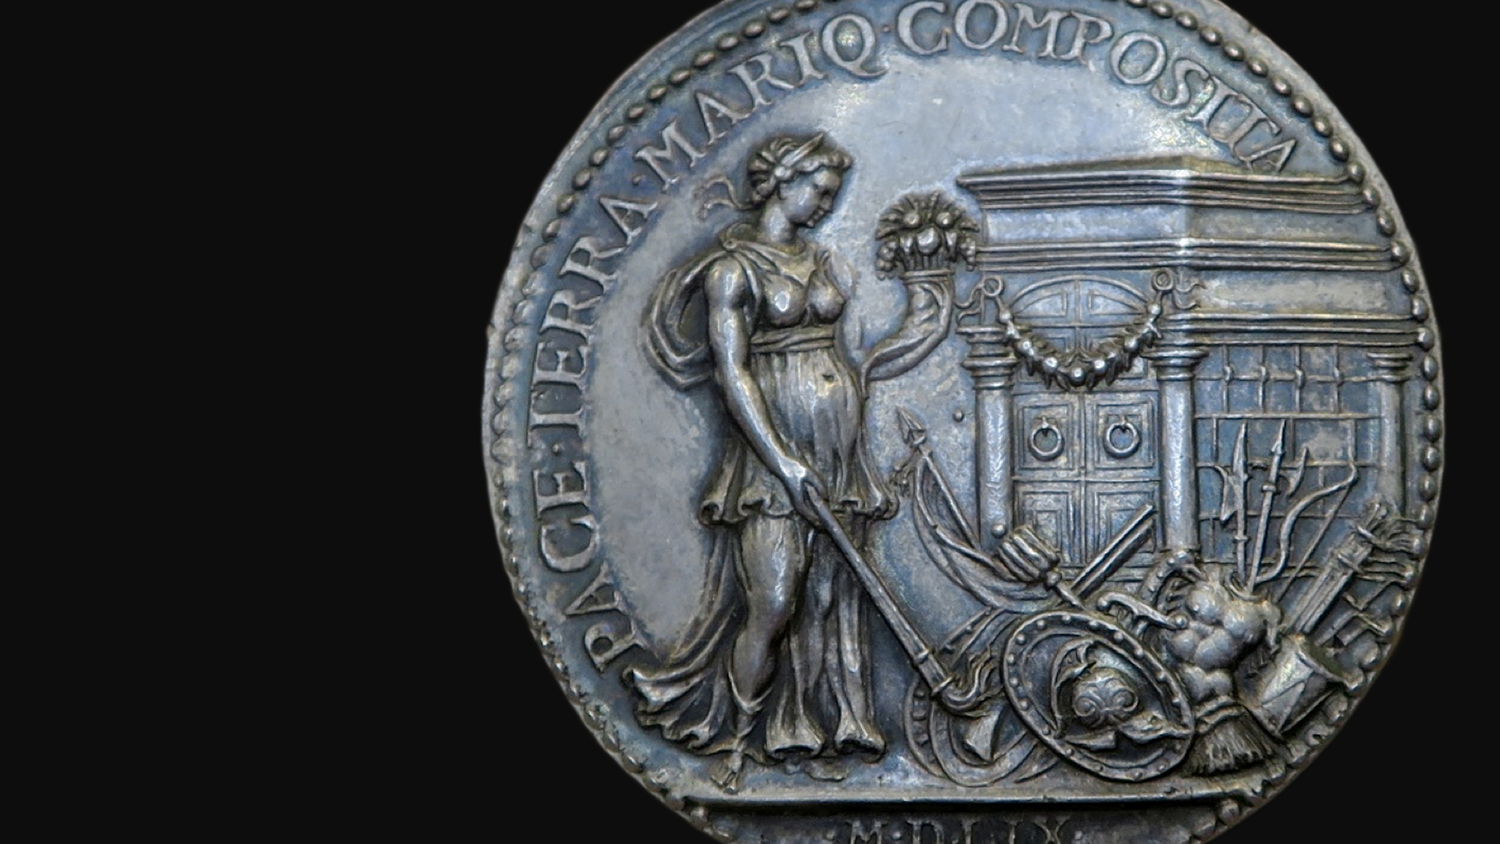 Long Table 120. Salton Medals at the Metropolitan Museum of...